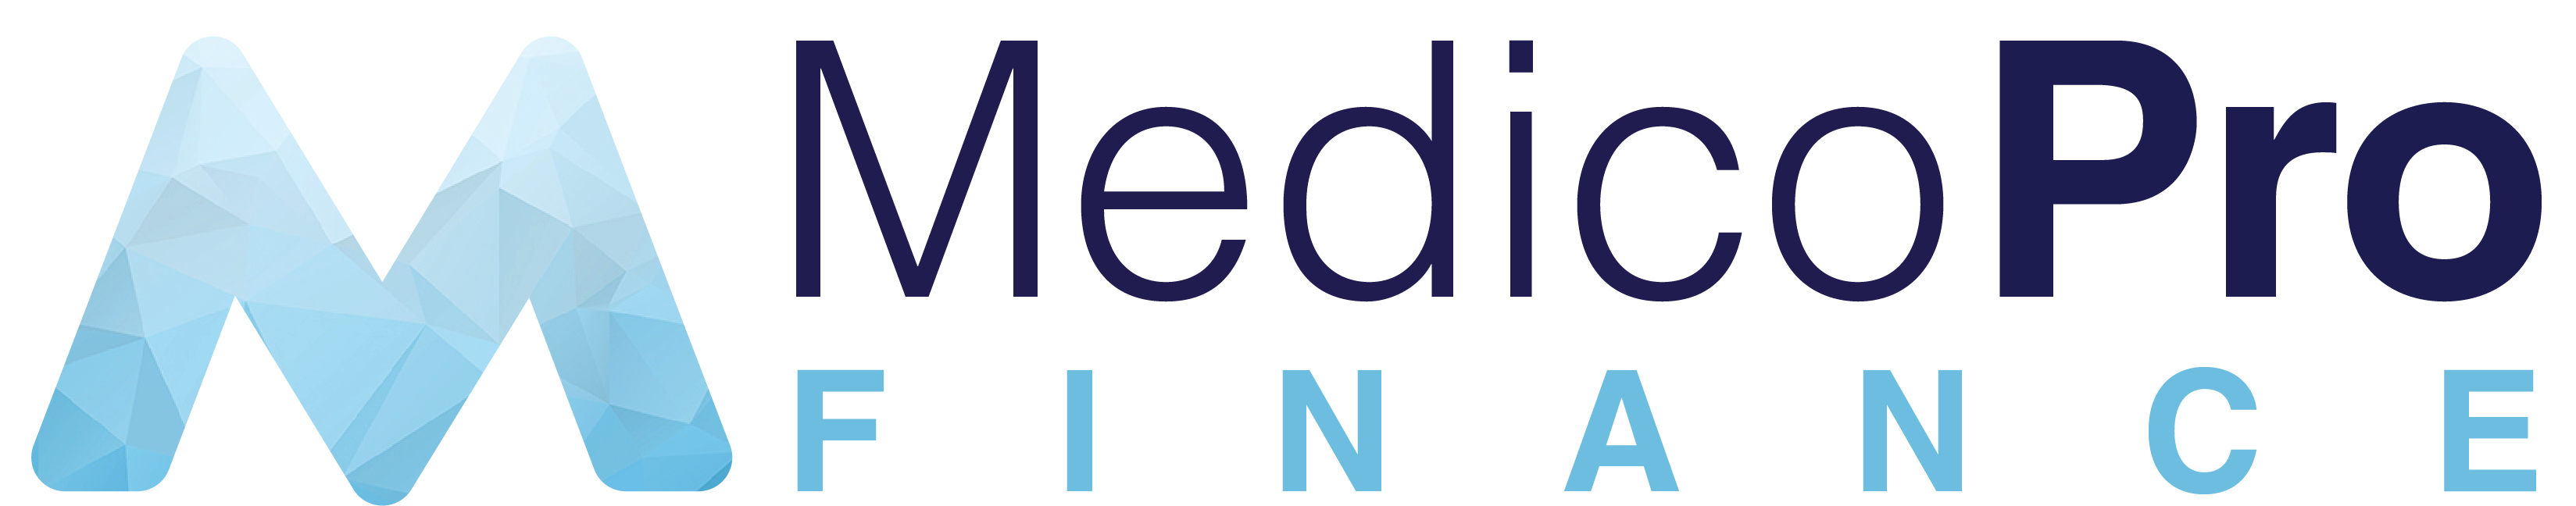 MedicoProFinance - Logo_horizontal